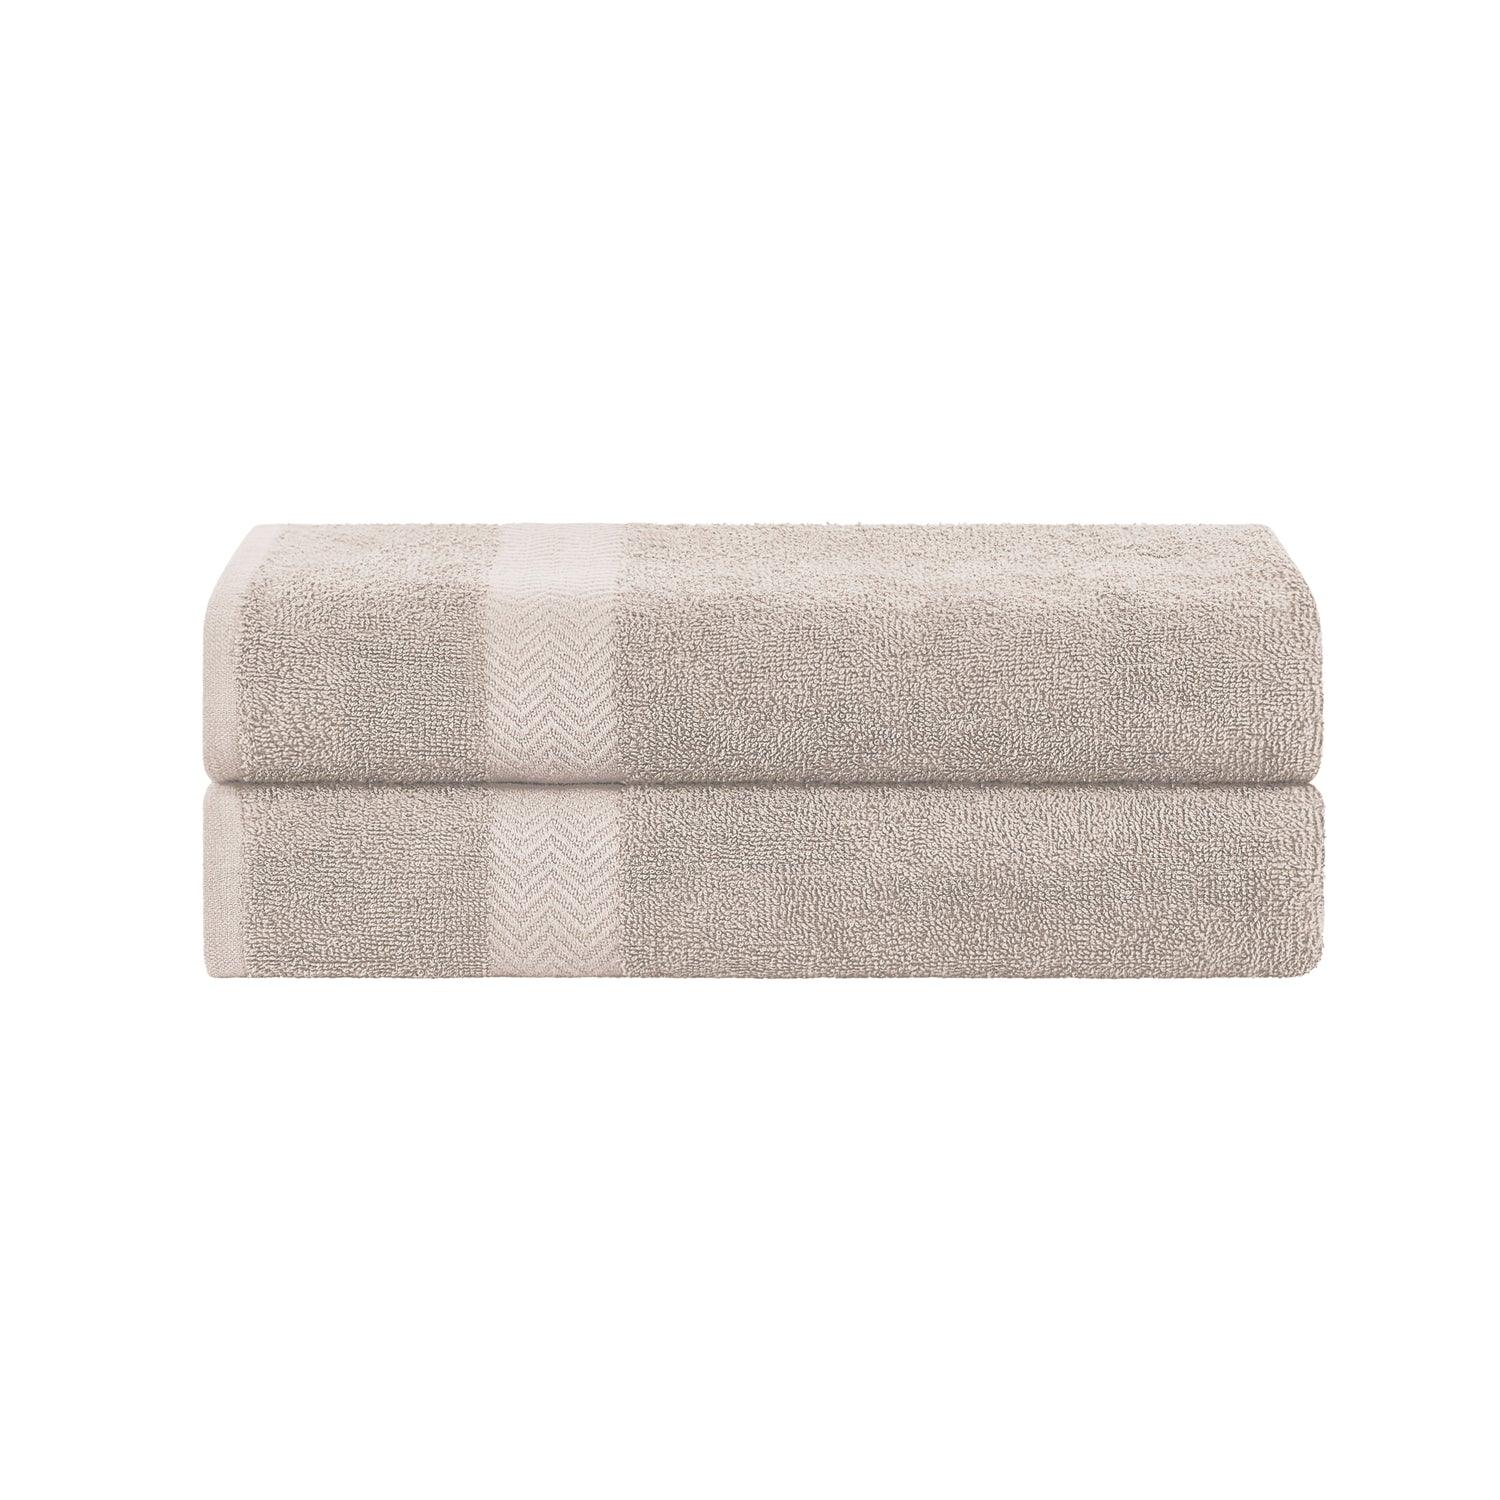 Superior Cotton Large Towels Eco-Friendly Bathroom Essentials 2-Piece Bath Sheet Set - Stone